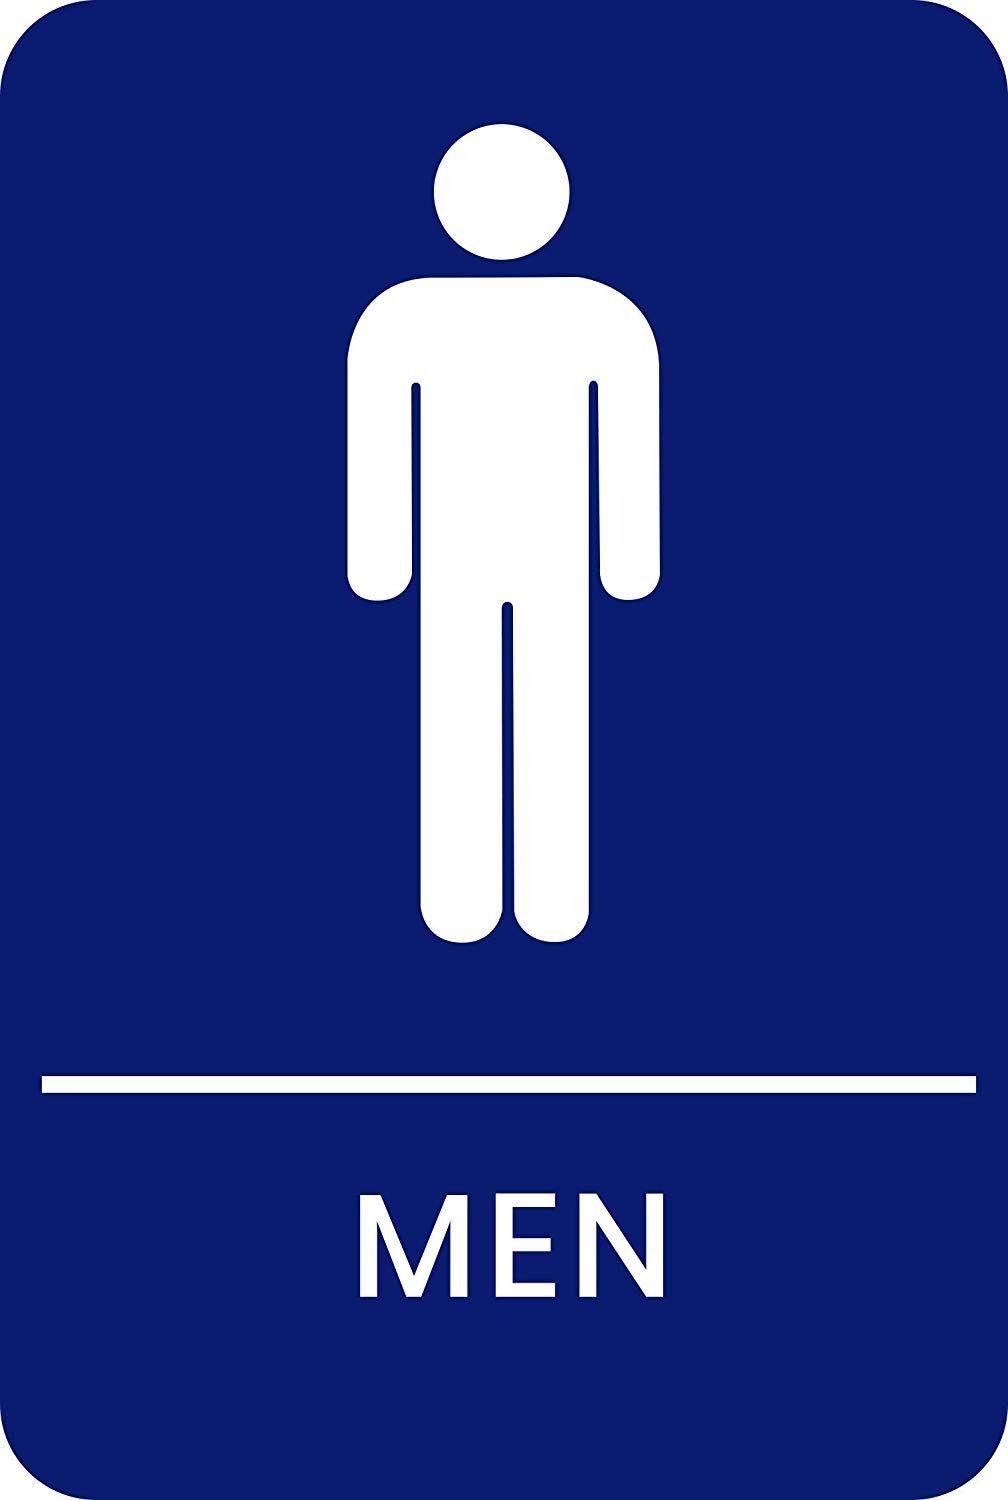 Bathroom Logo - Amazon.com : Men's Braille Restroom Sign Blue Bathroom